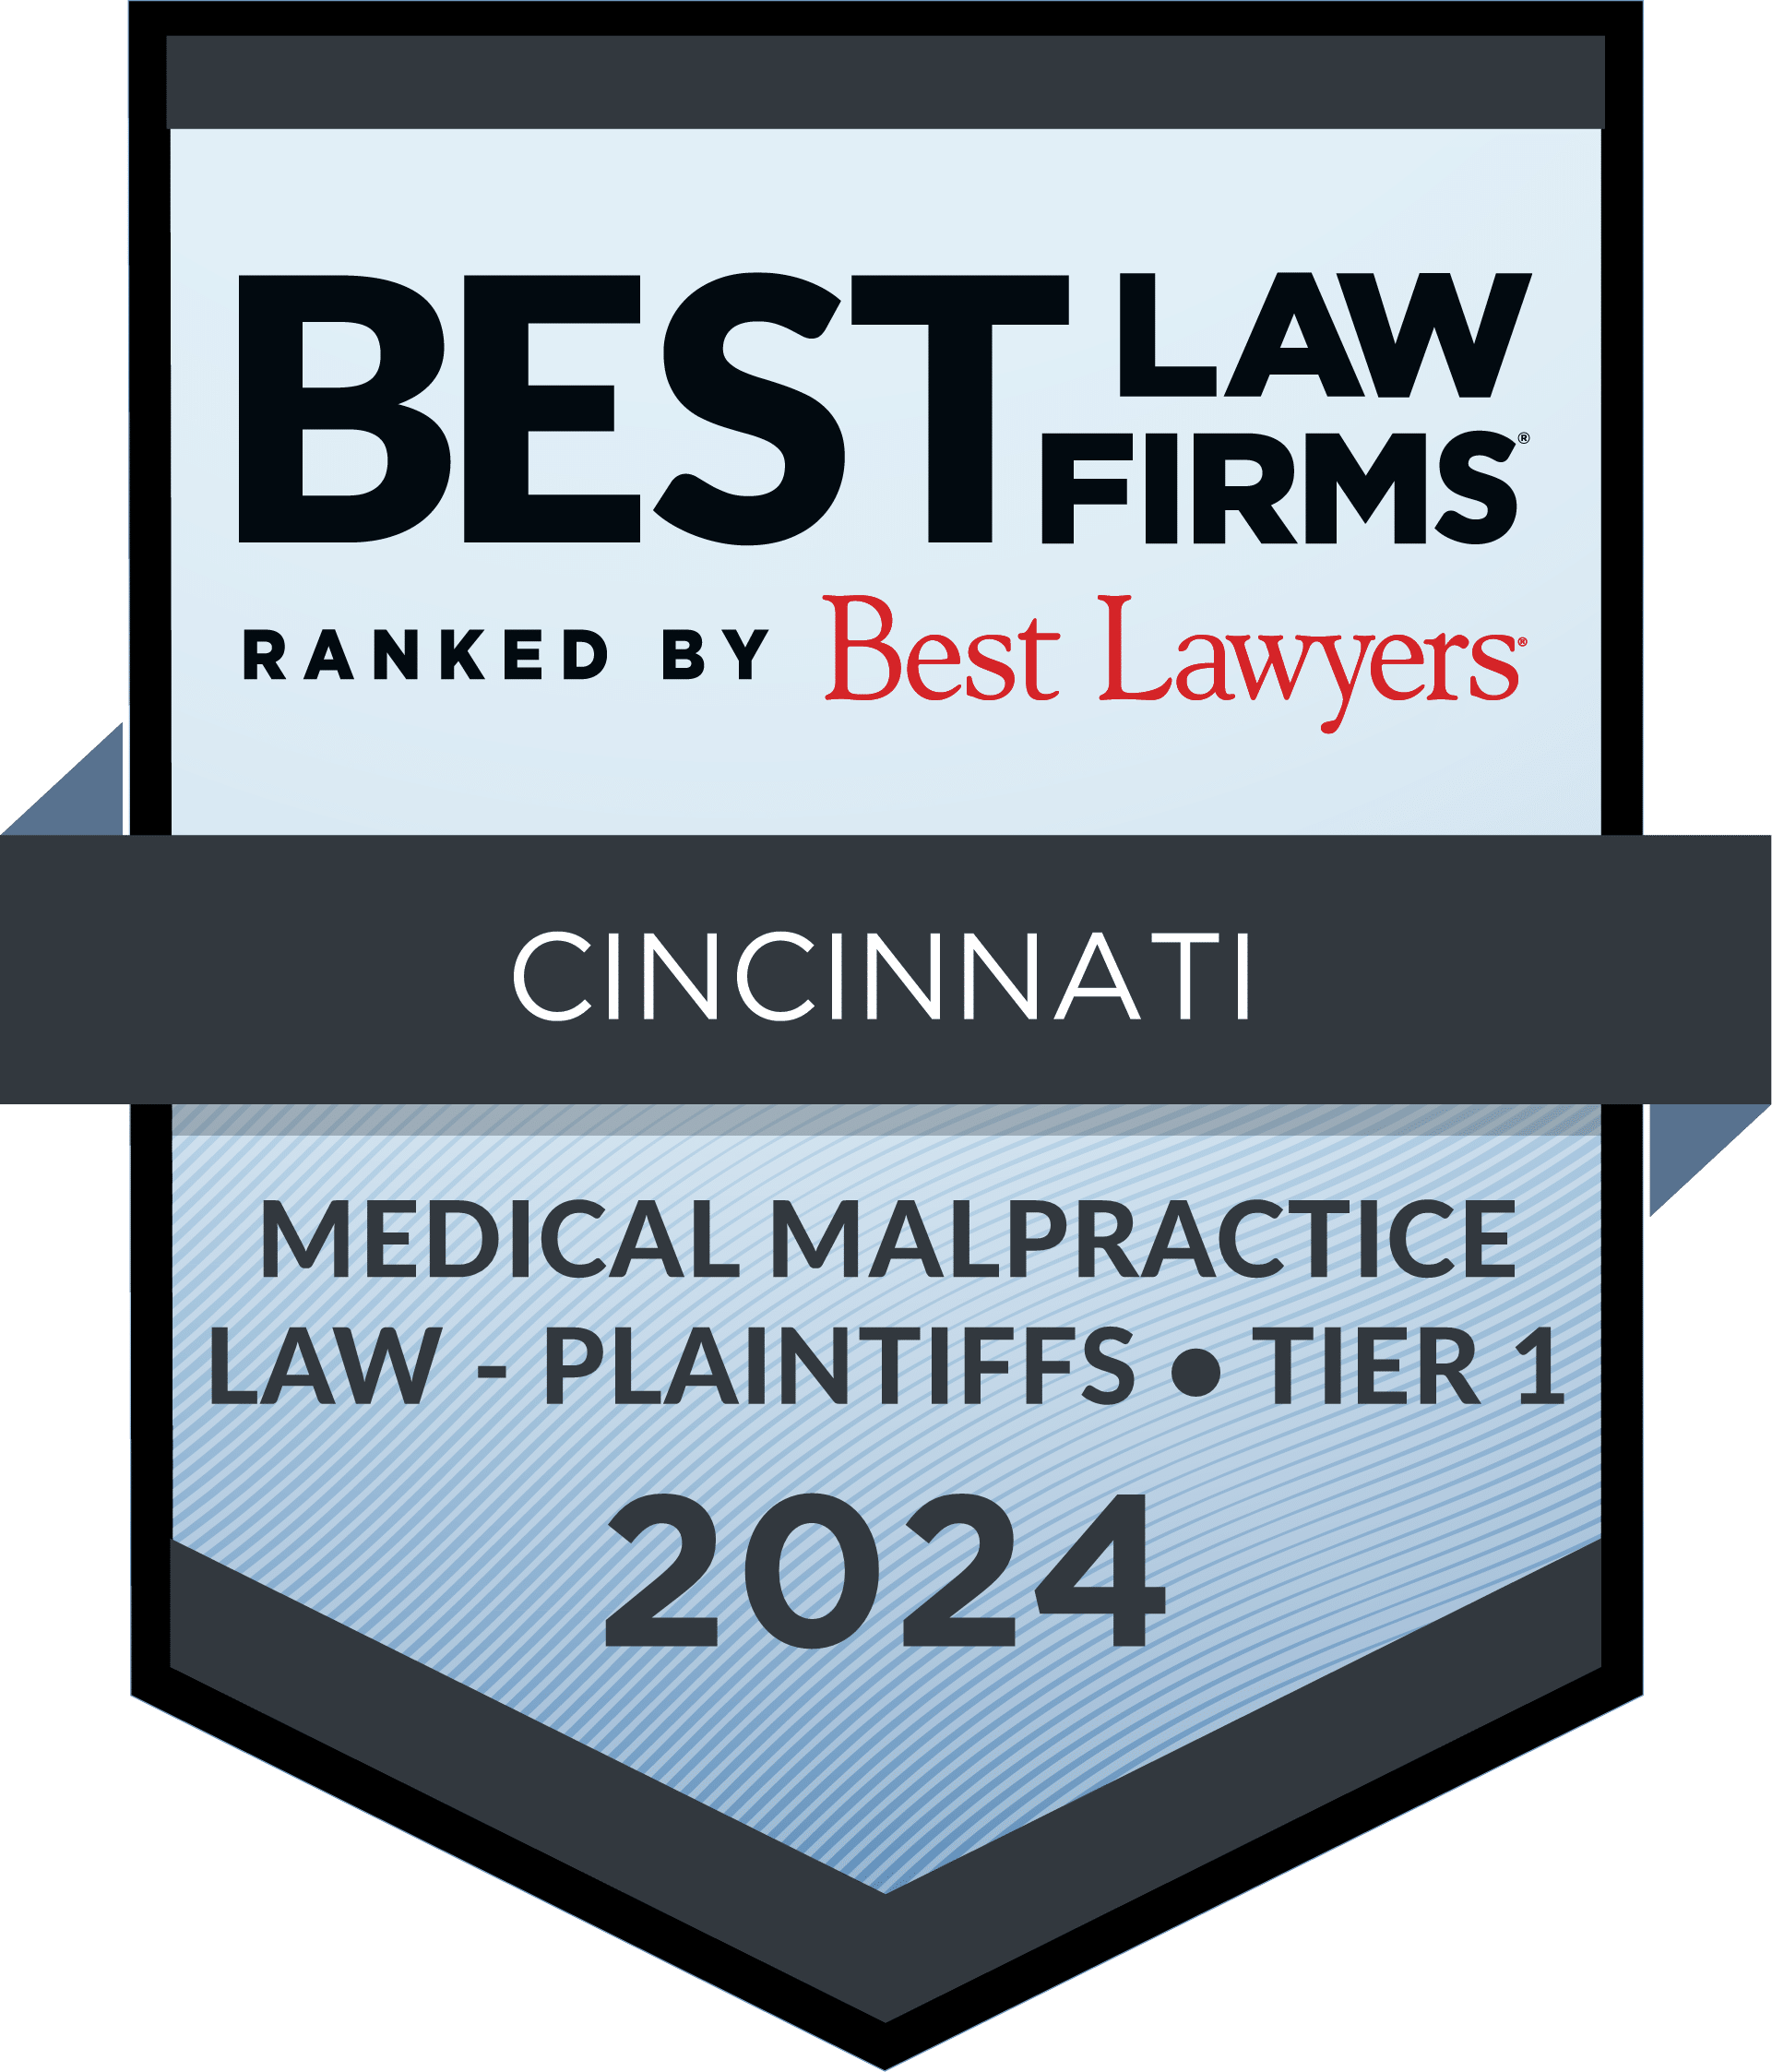 Best Law Firms - Cincinnati Medical Malpractice Law Badge TLF